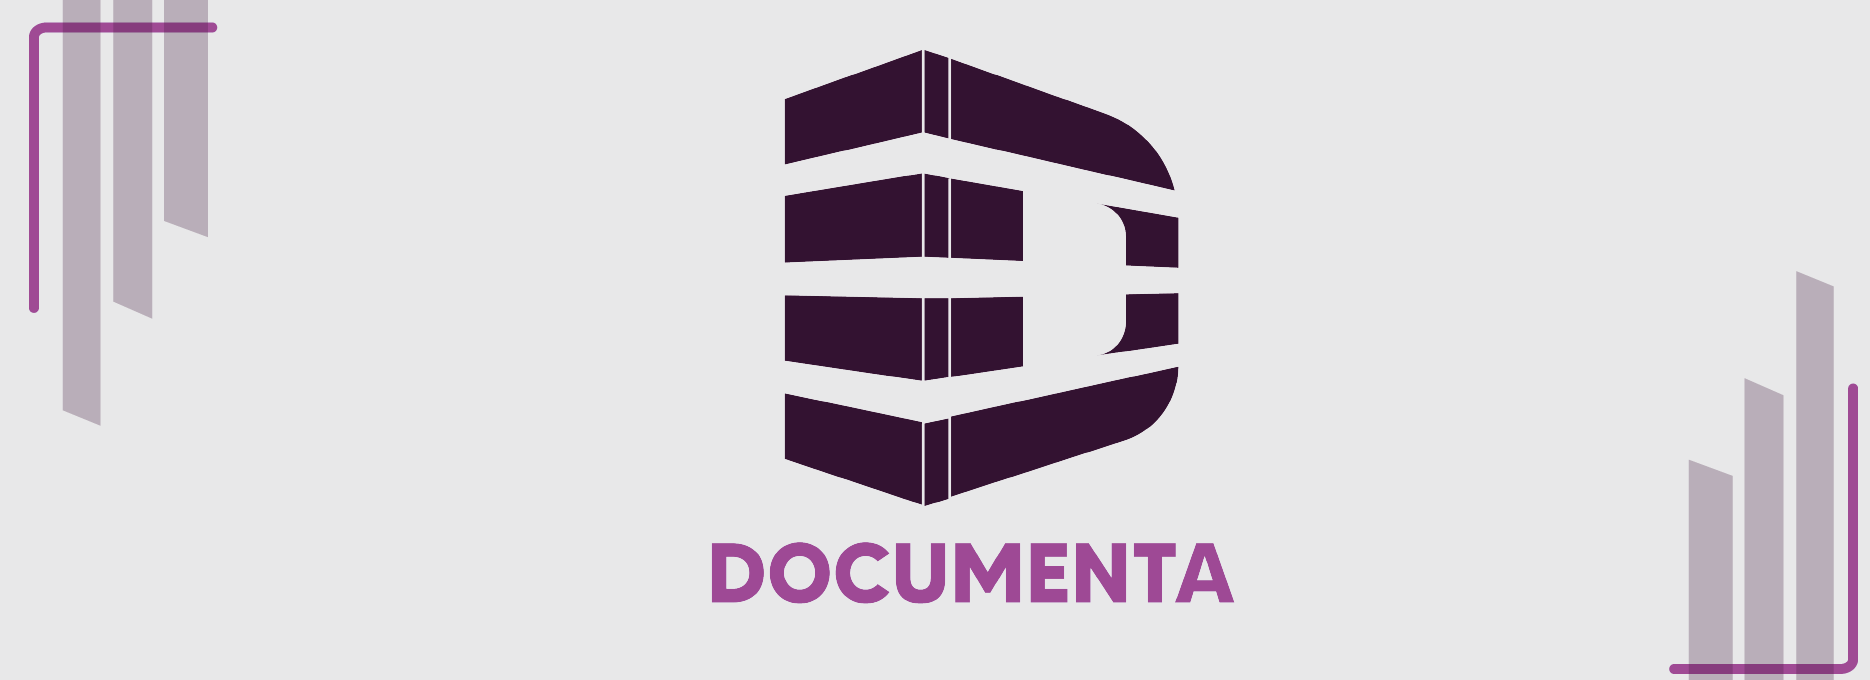 Banner Documenta.png